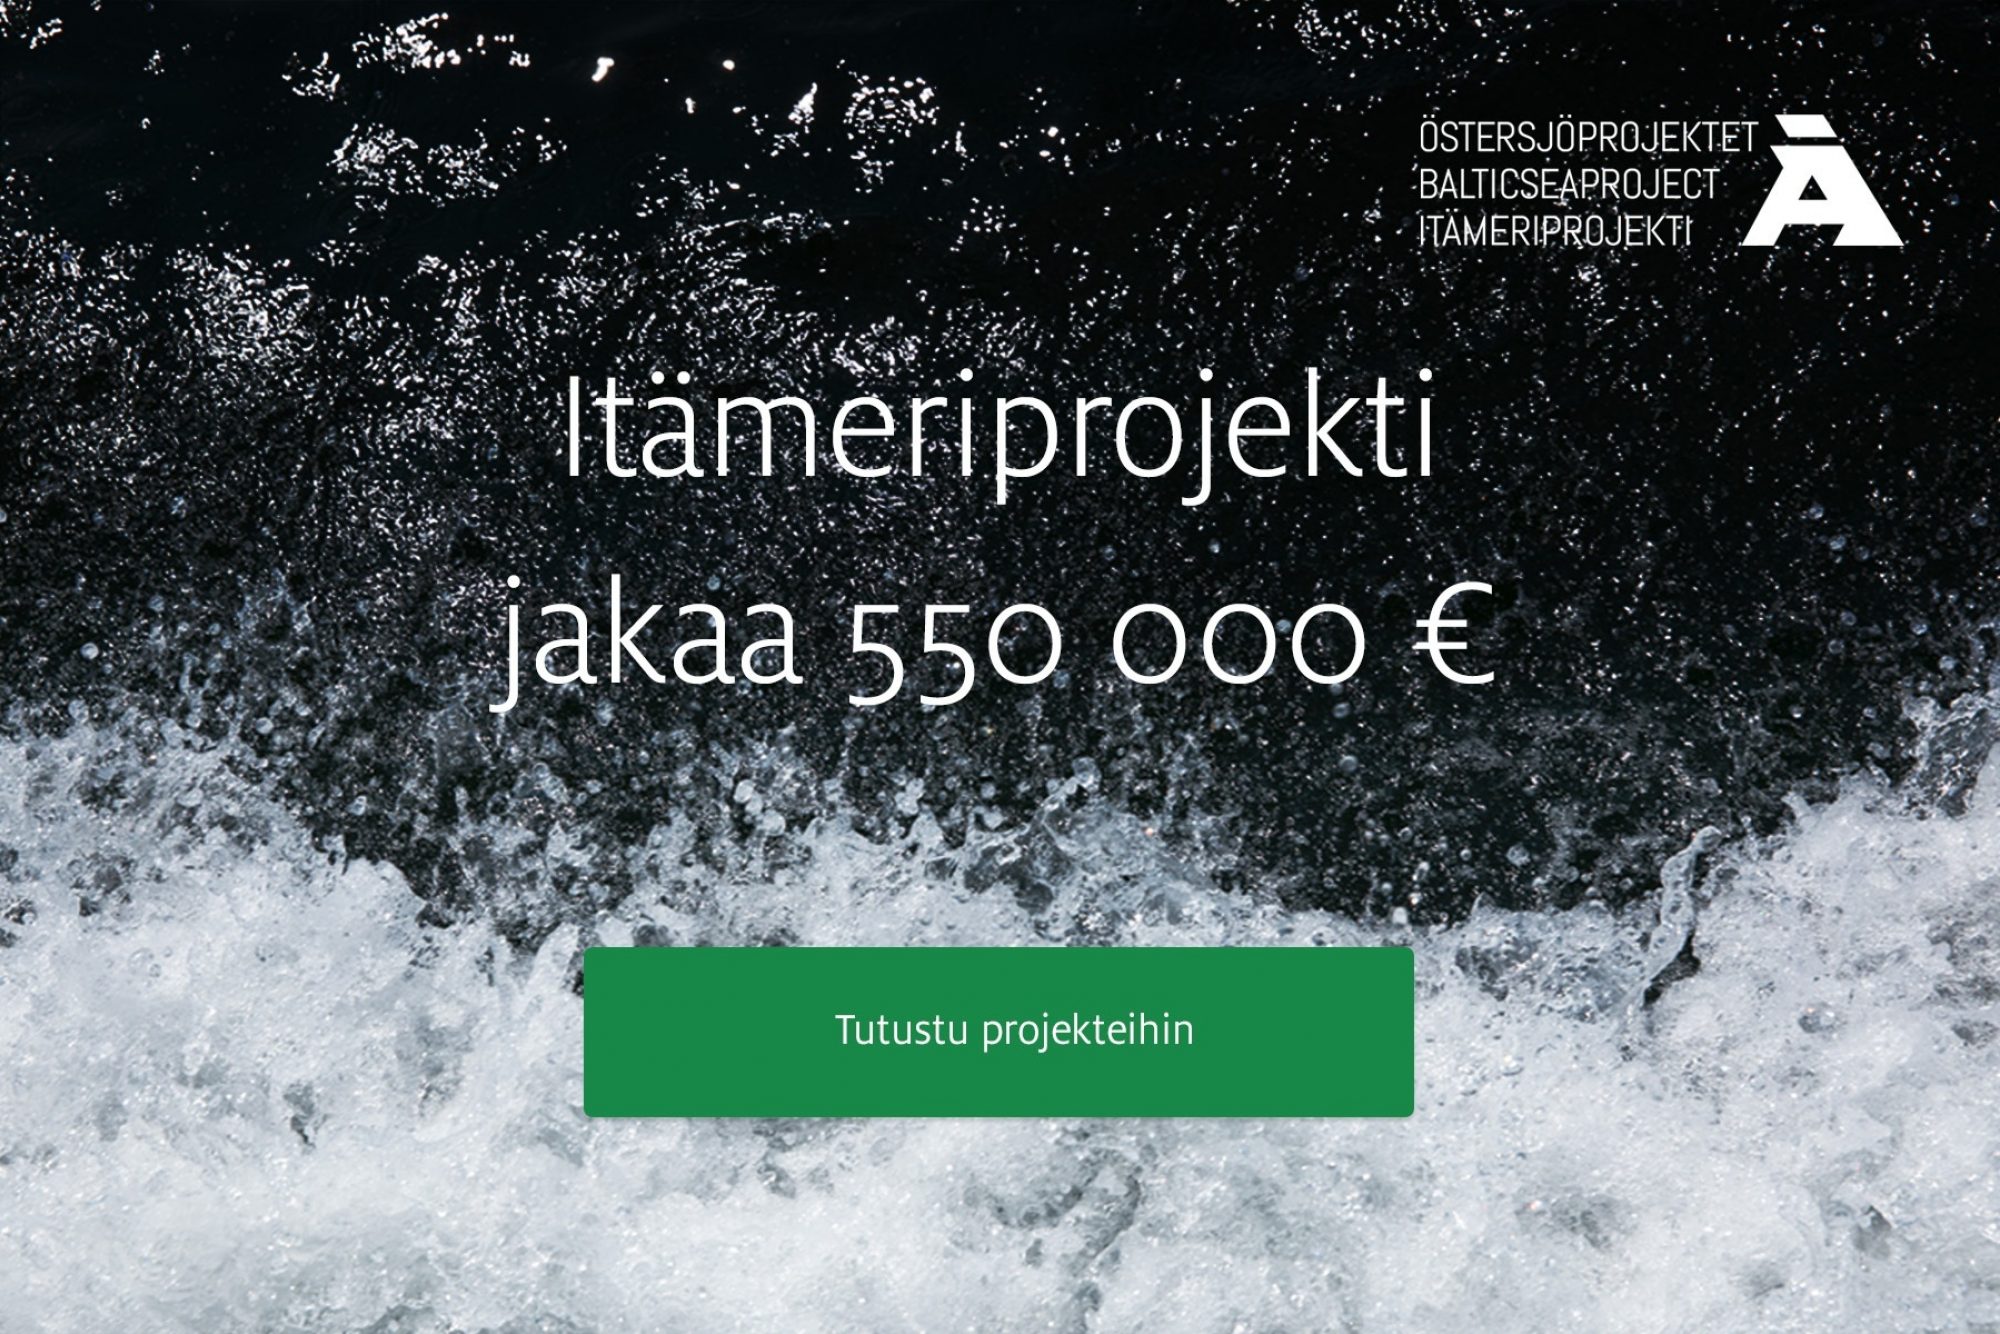 Ostersjoprojektet delar ut 550000 euro finska